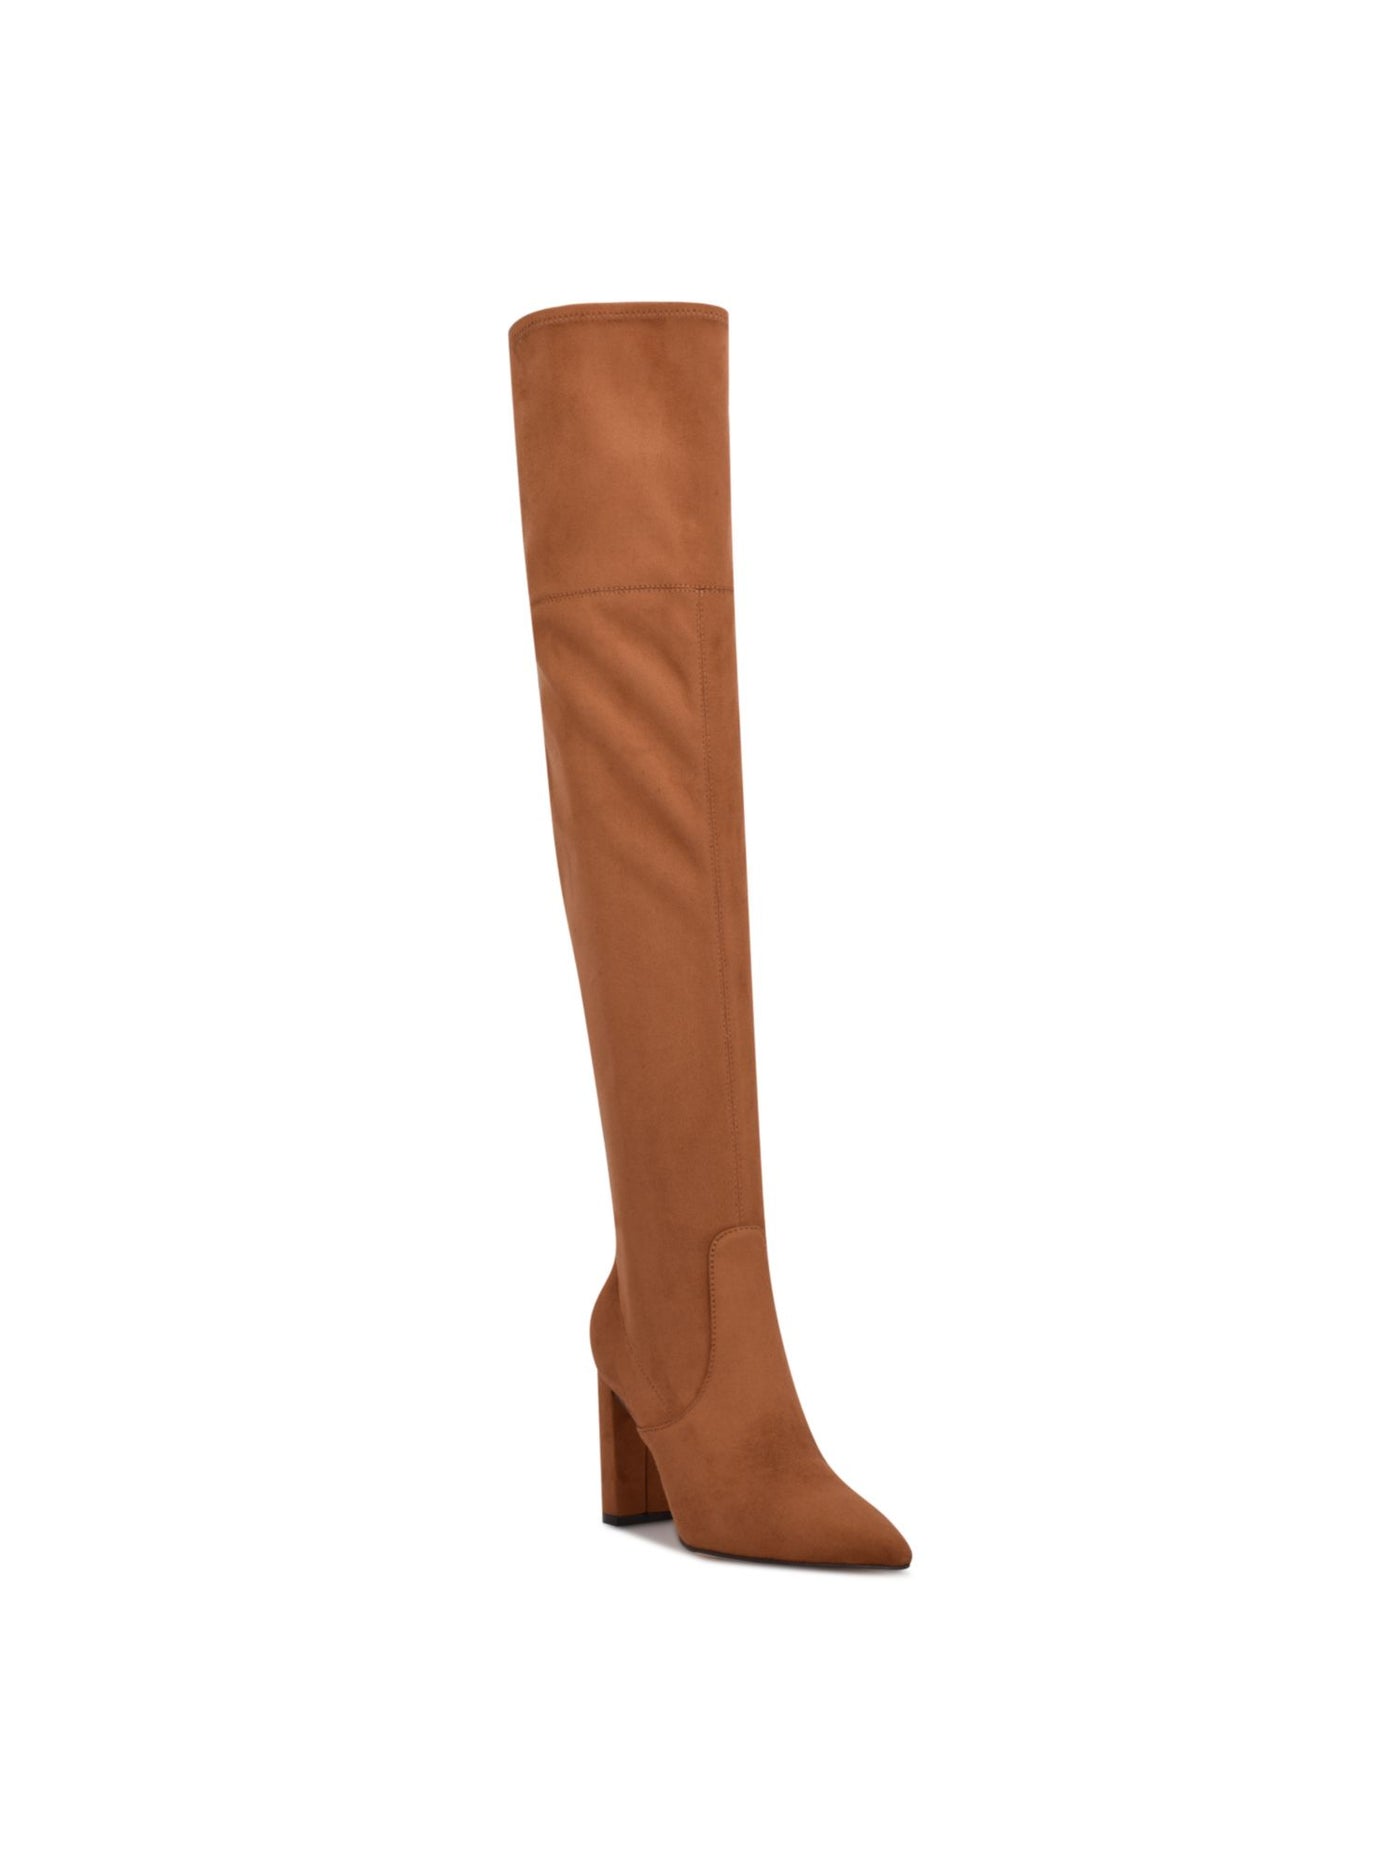 NINE WEST Womens Beige Goring Padded Dasher Pointed Toe Block Heel Zip-Up Dress Boots 5.5 M